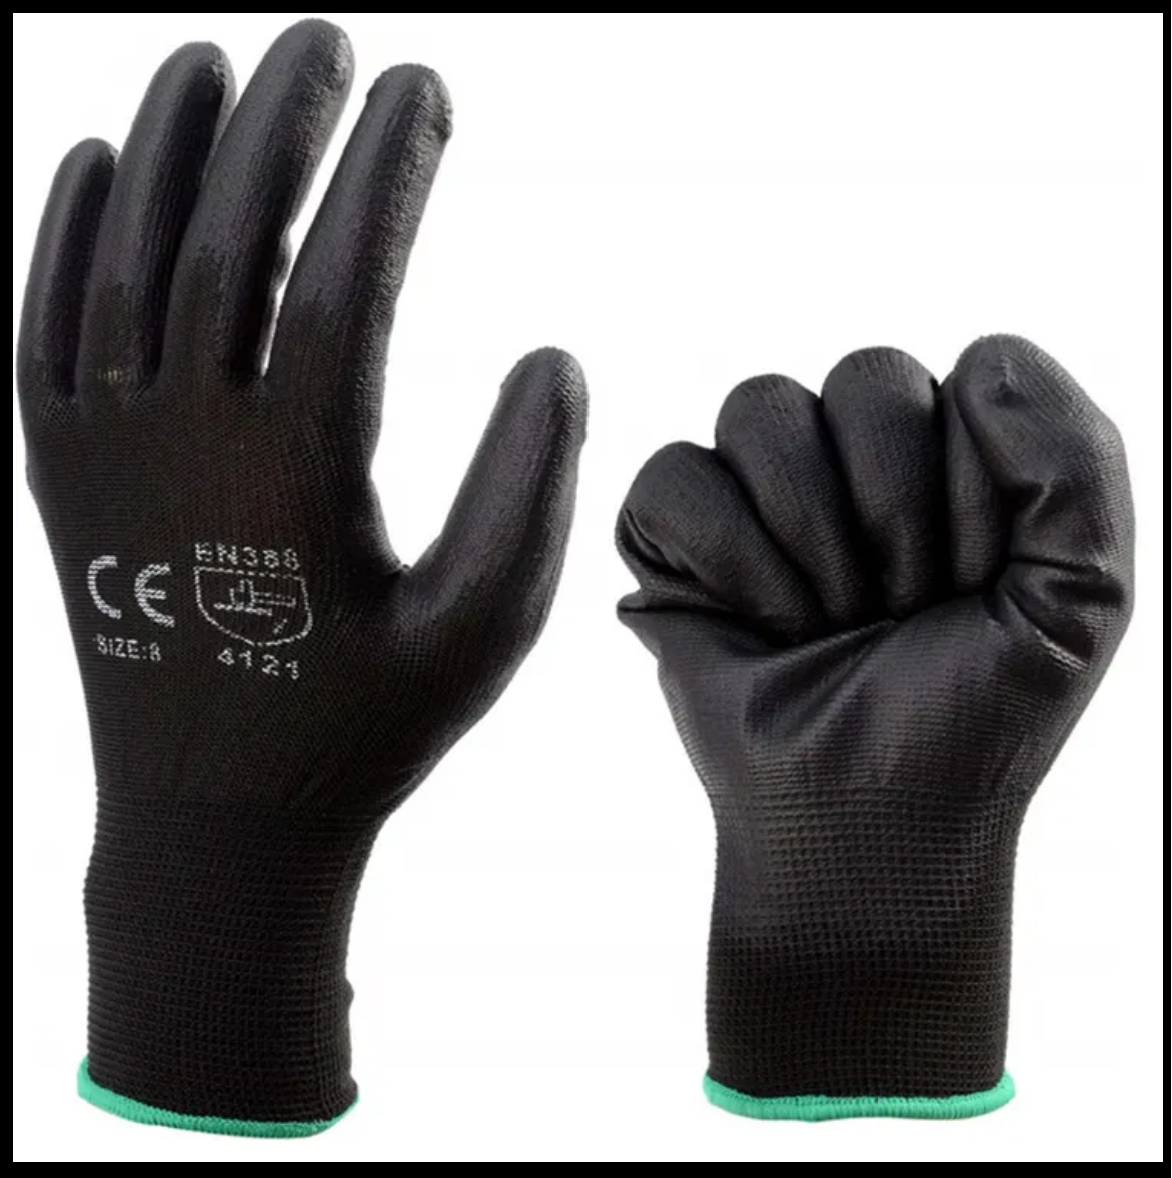 PU Safety Gloves Light Weight 